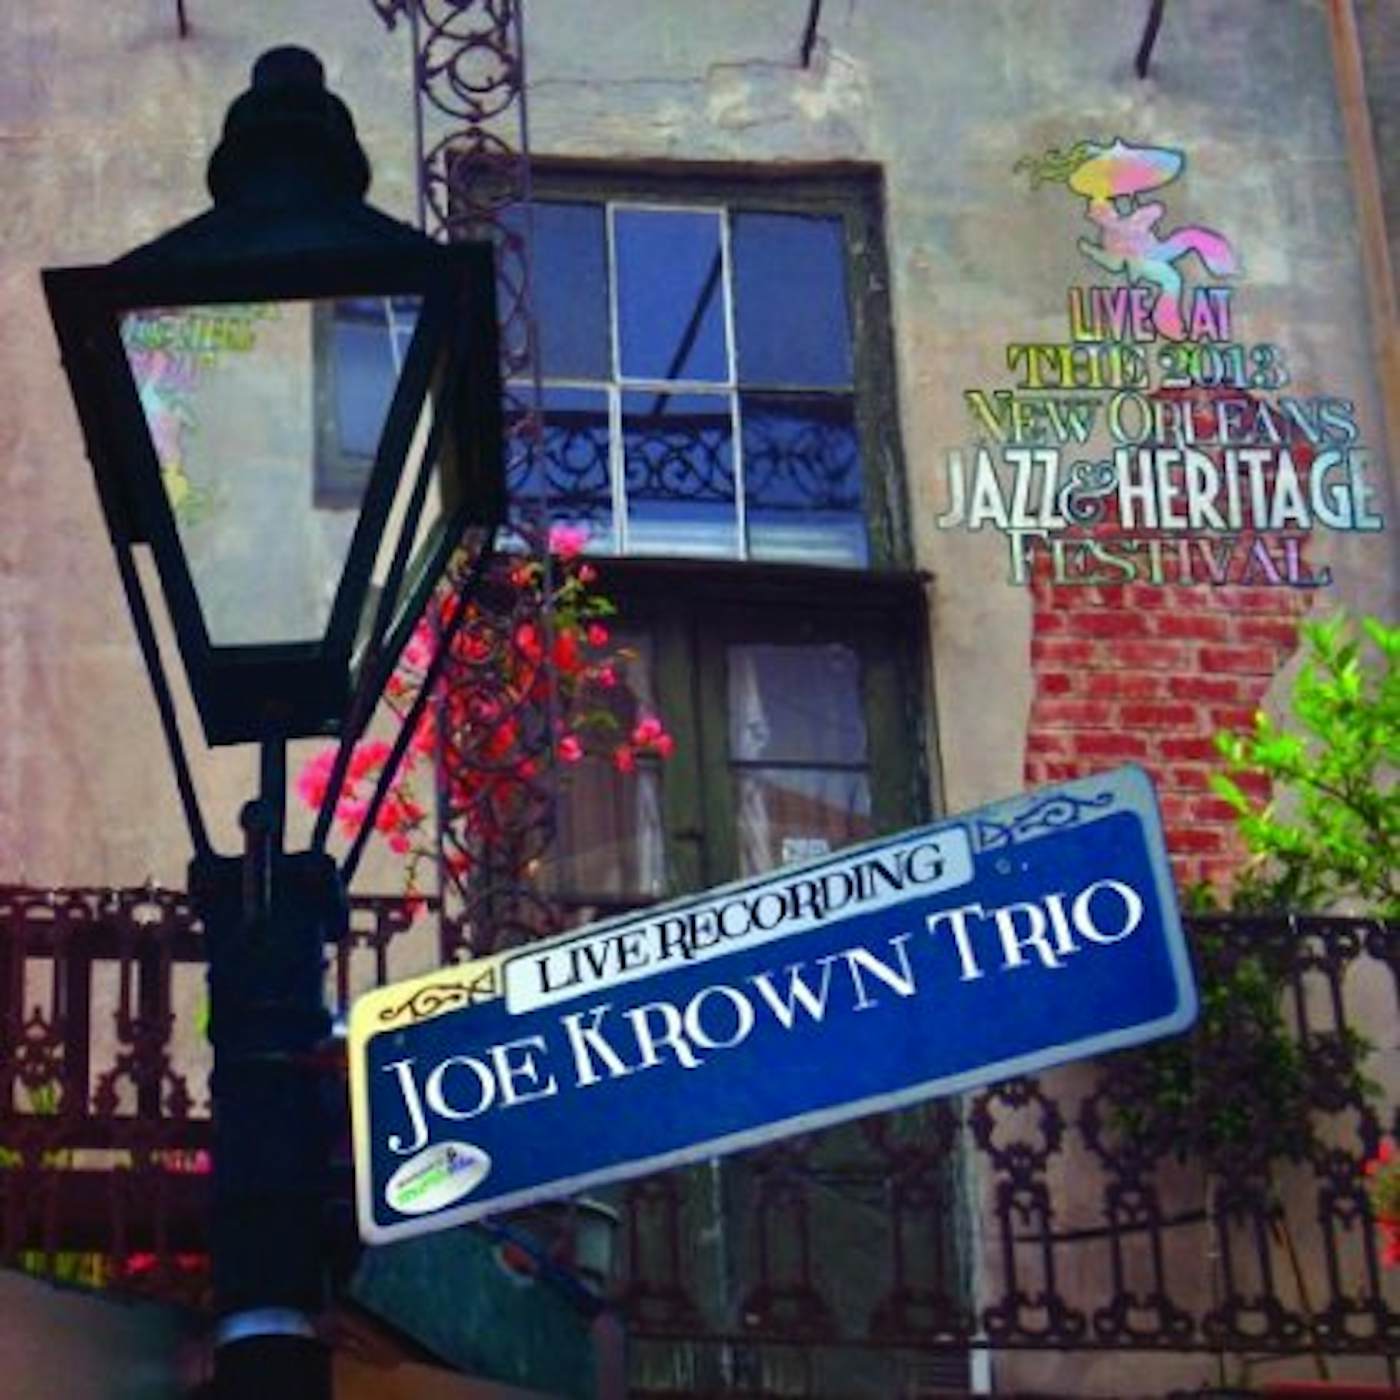 Joe Krown LIVE AT JAZZFEST 2013 CD